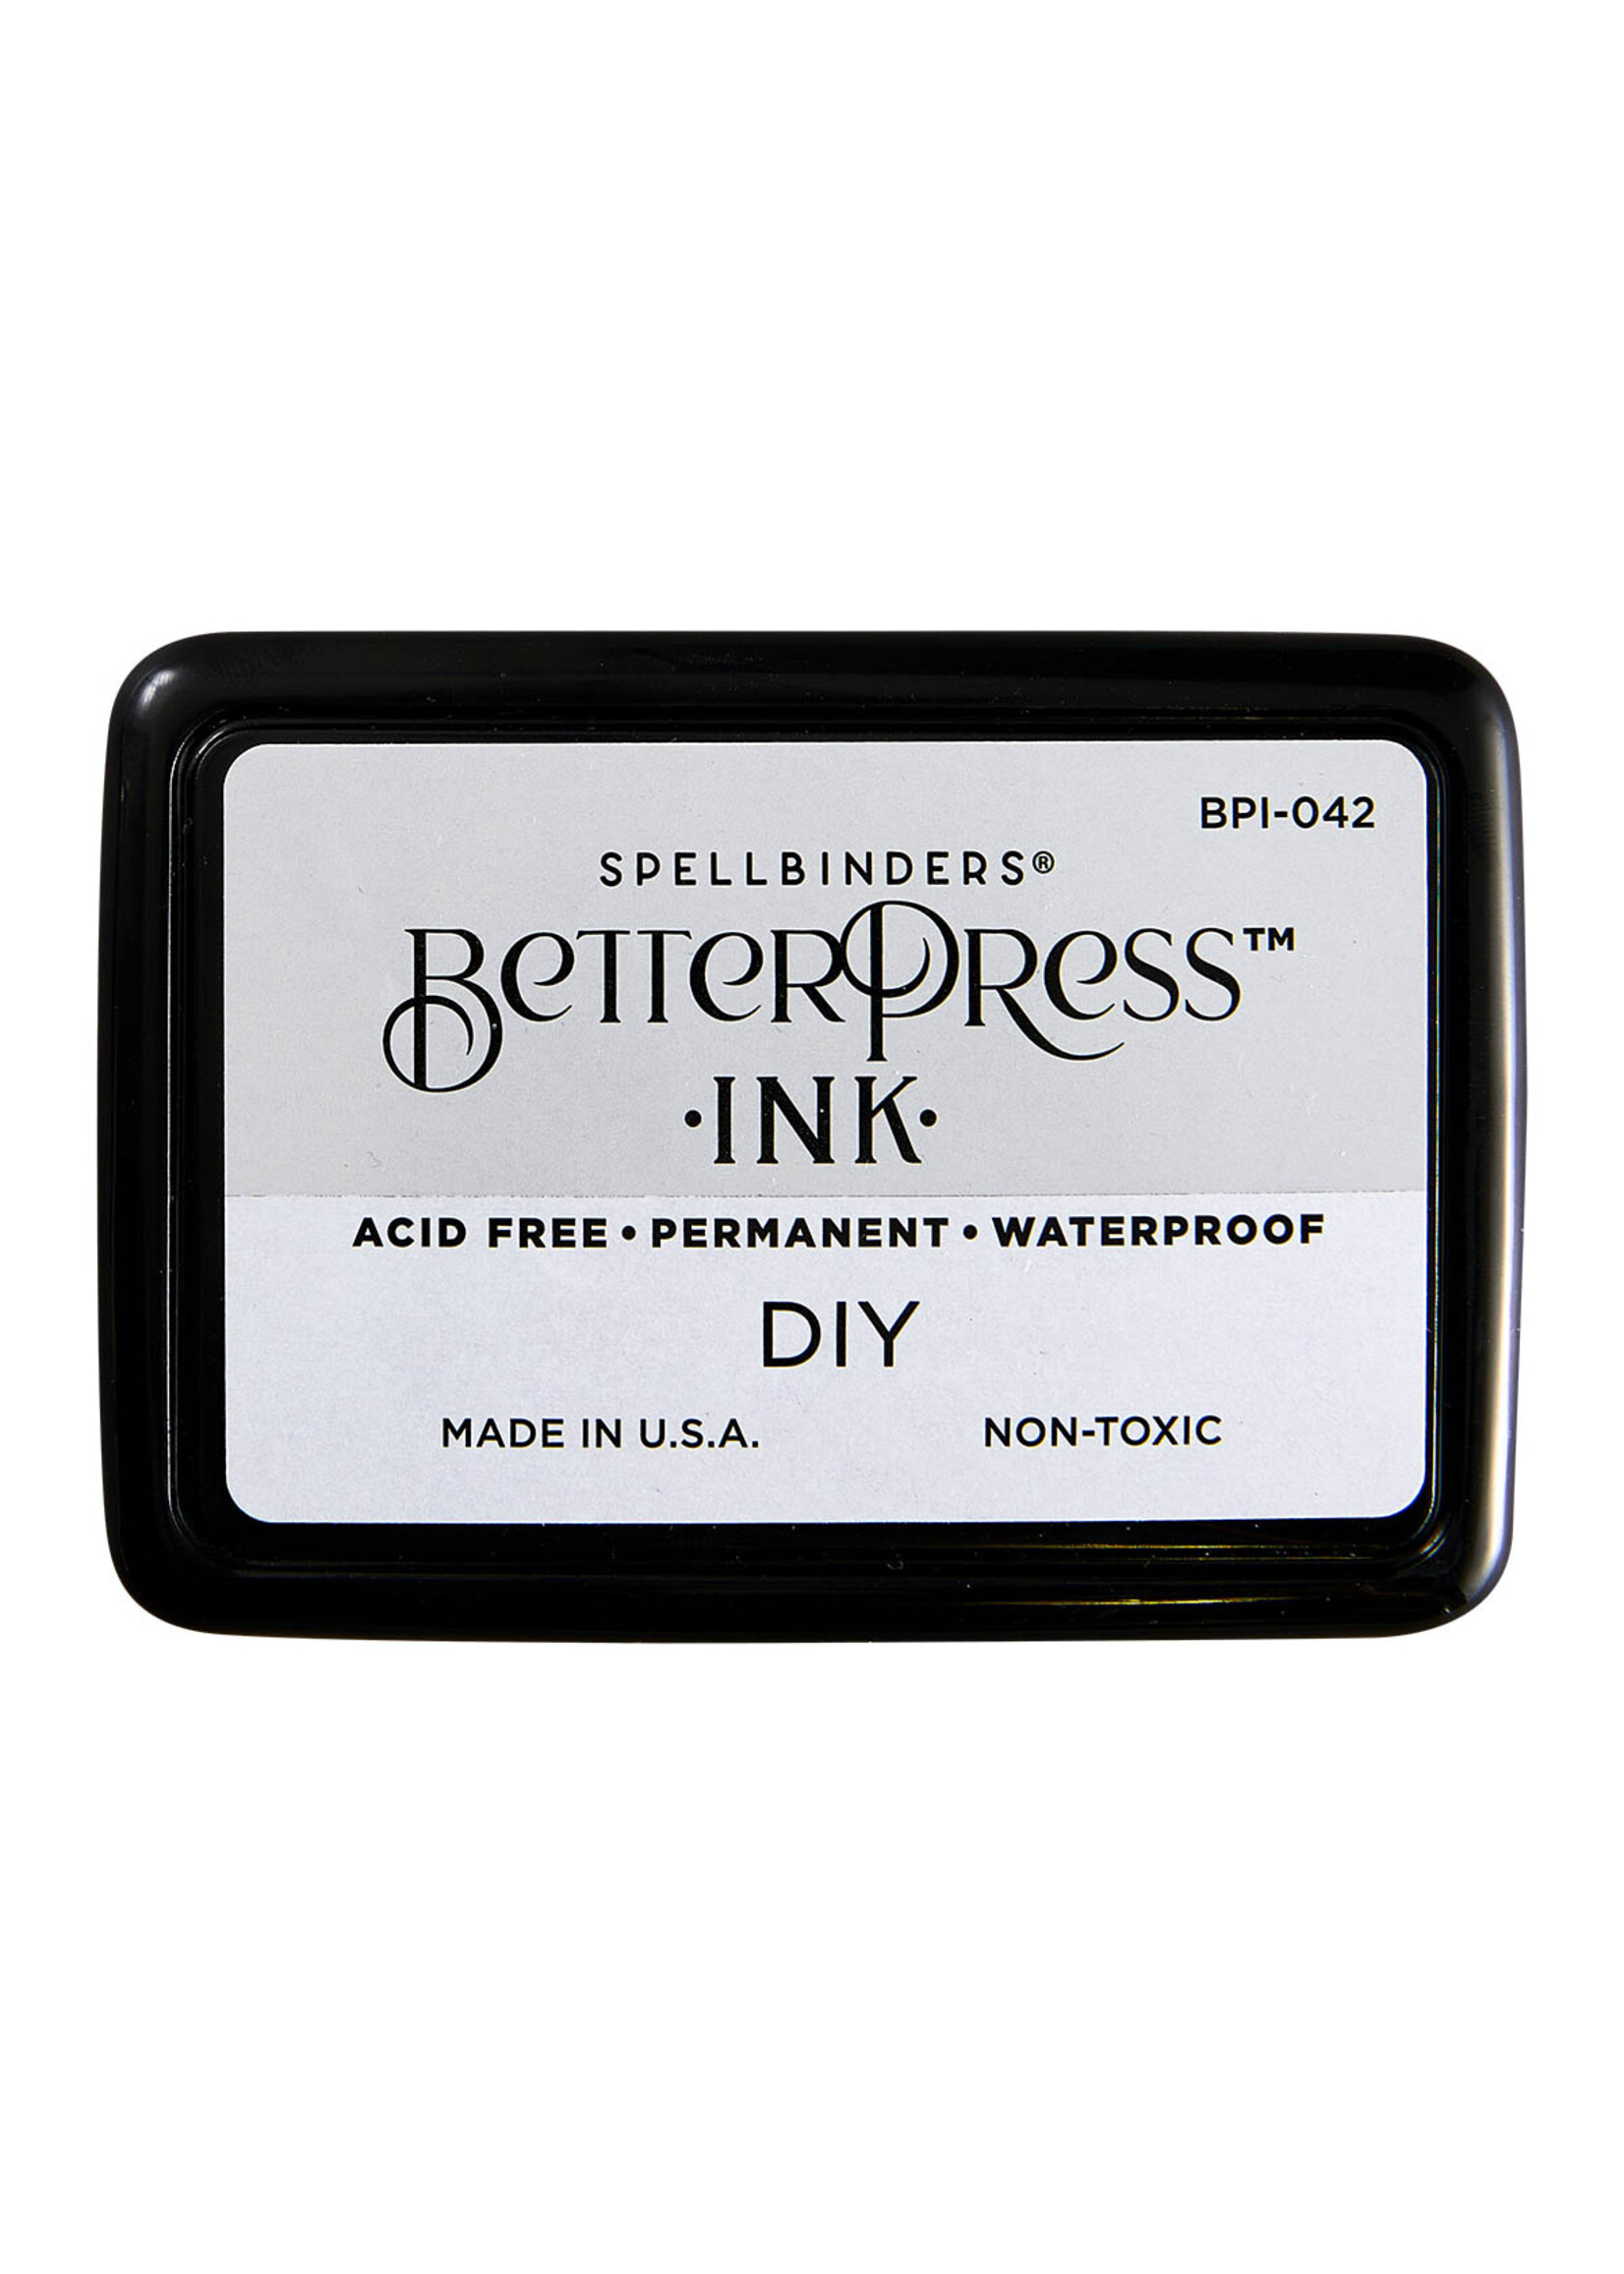 spellbinders Full Size DIY BetterPress Ink Pad